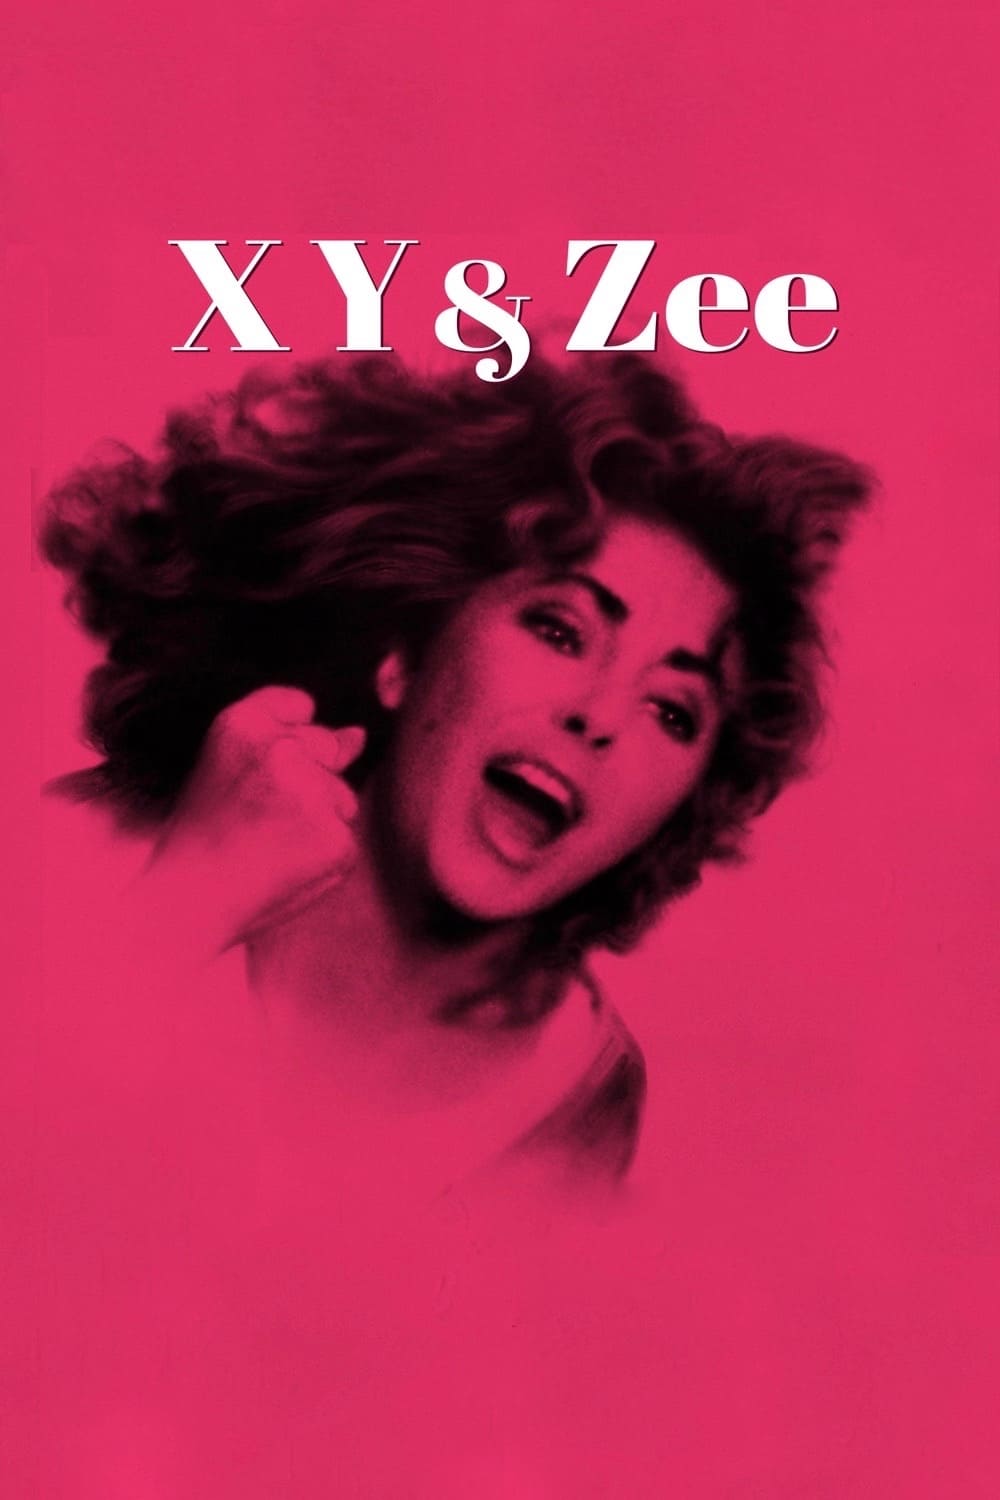 Zee and Co. (1972)